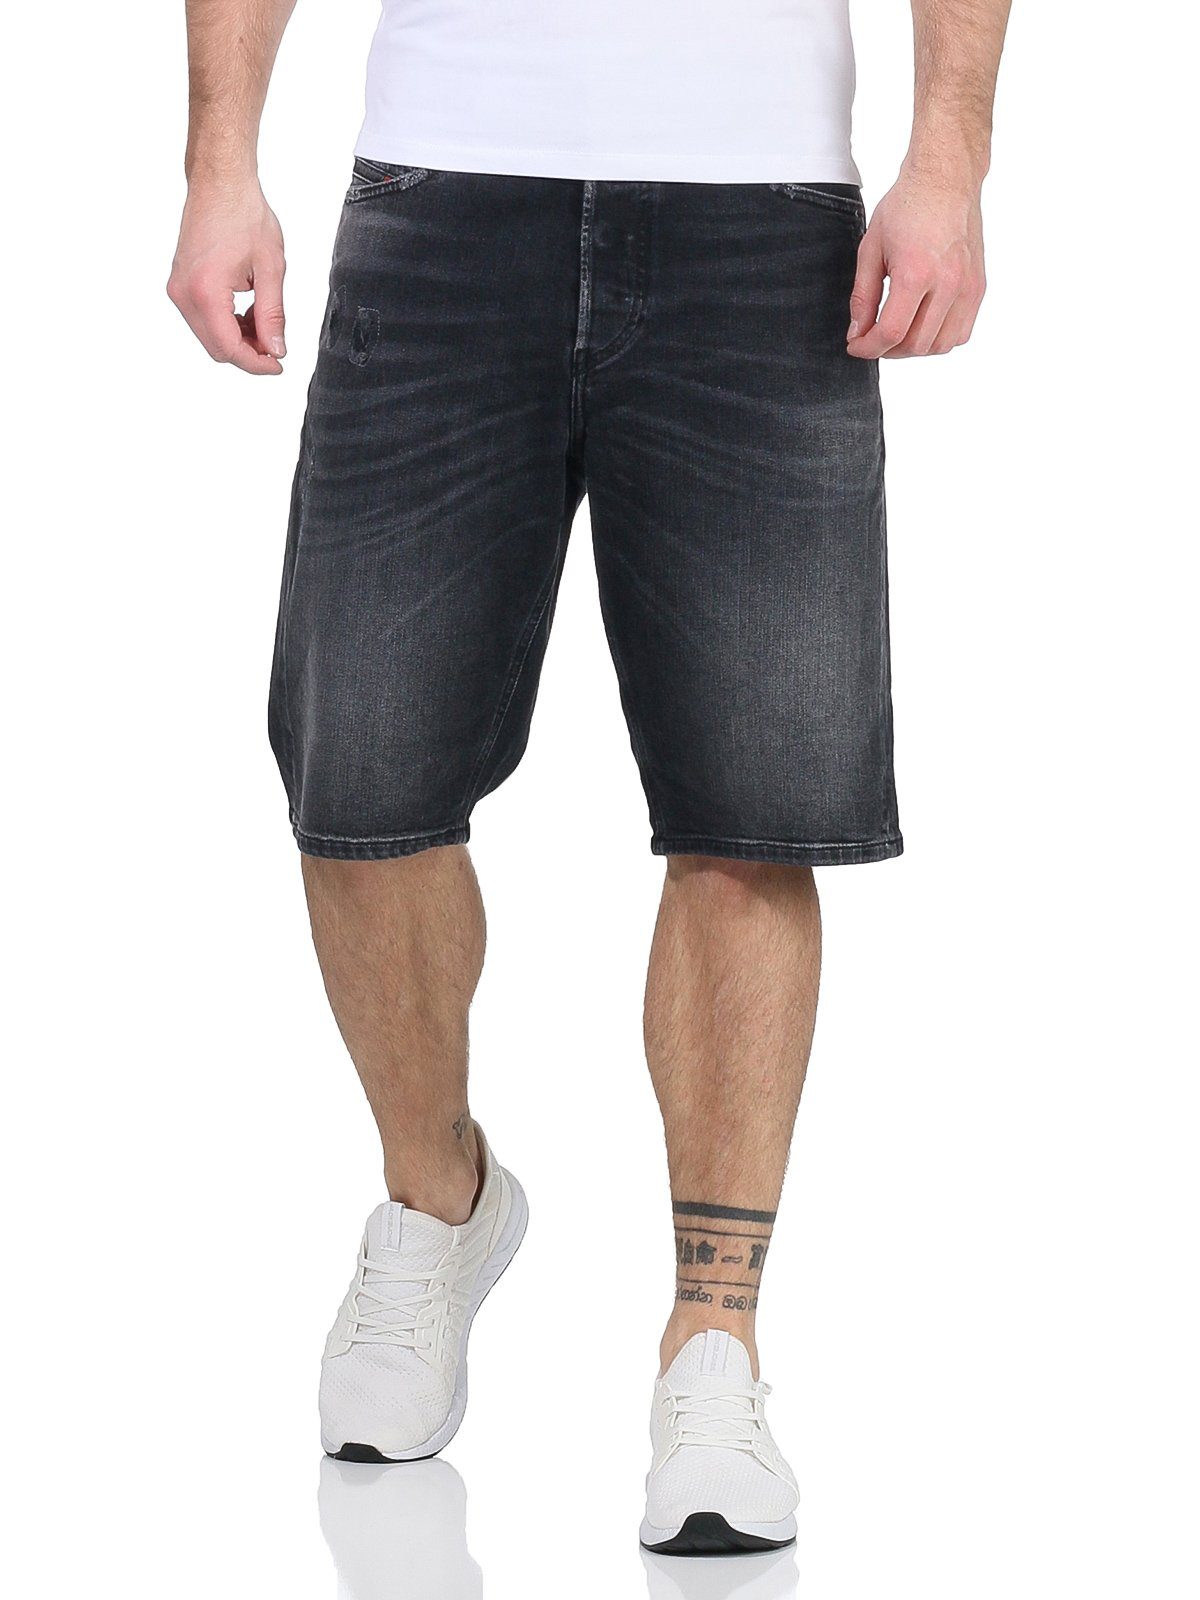 dezenter Shorts, Kroshort Jeans R930L Diesel kurze Used-Look Jeansshorts Hose Herren Anthrazit RG48R Shorts